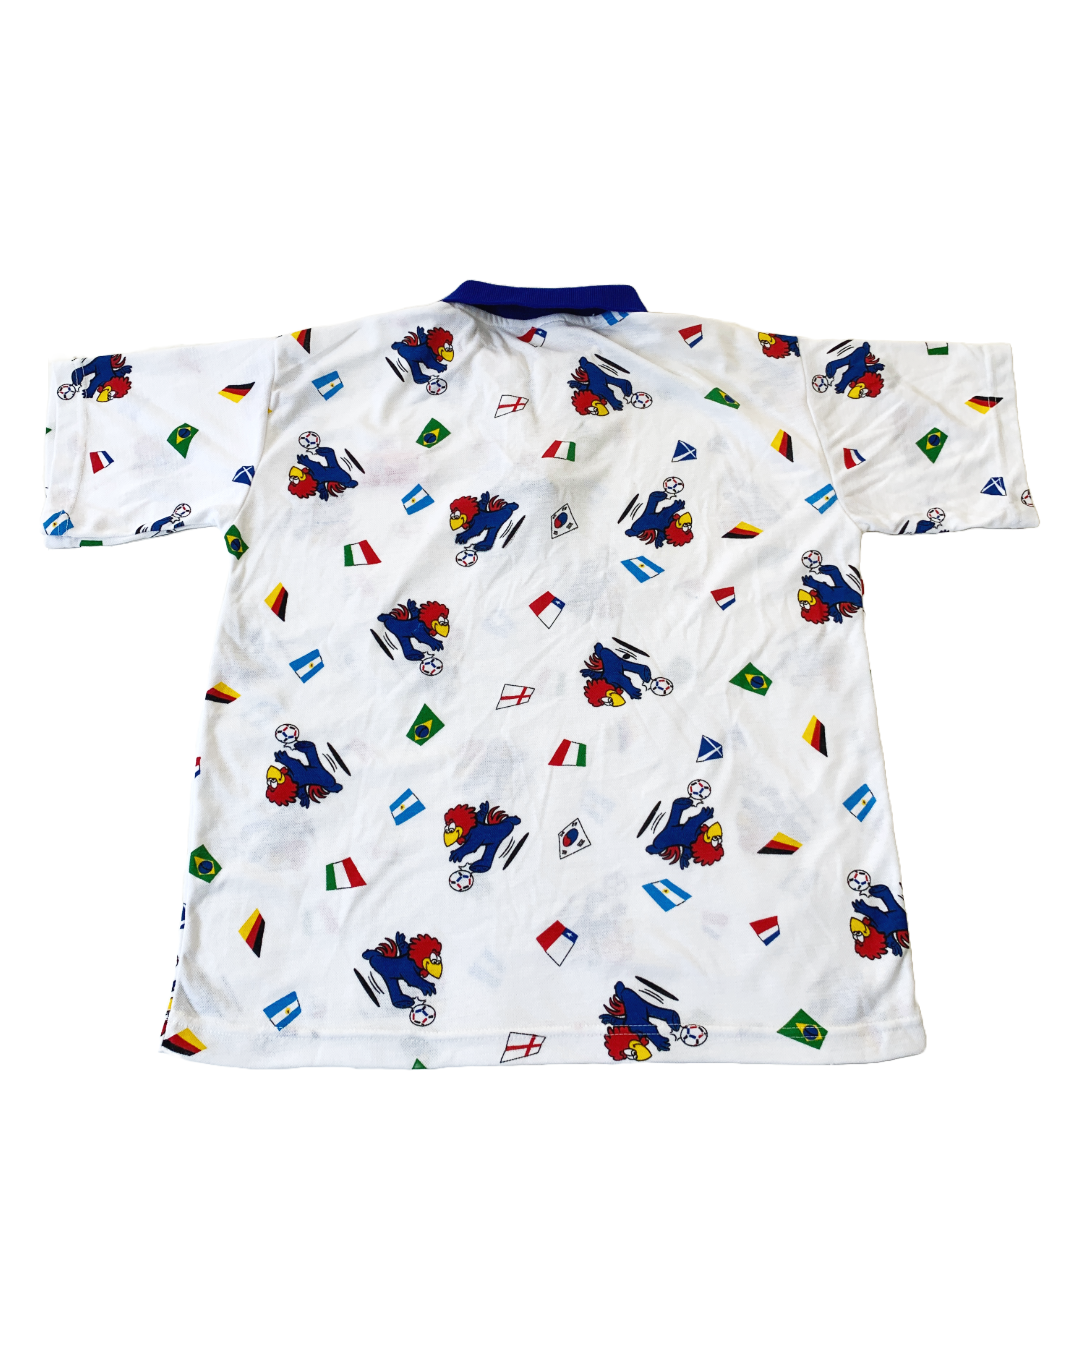 Nike France 98 Polo Shirt - XL